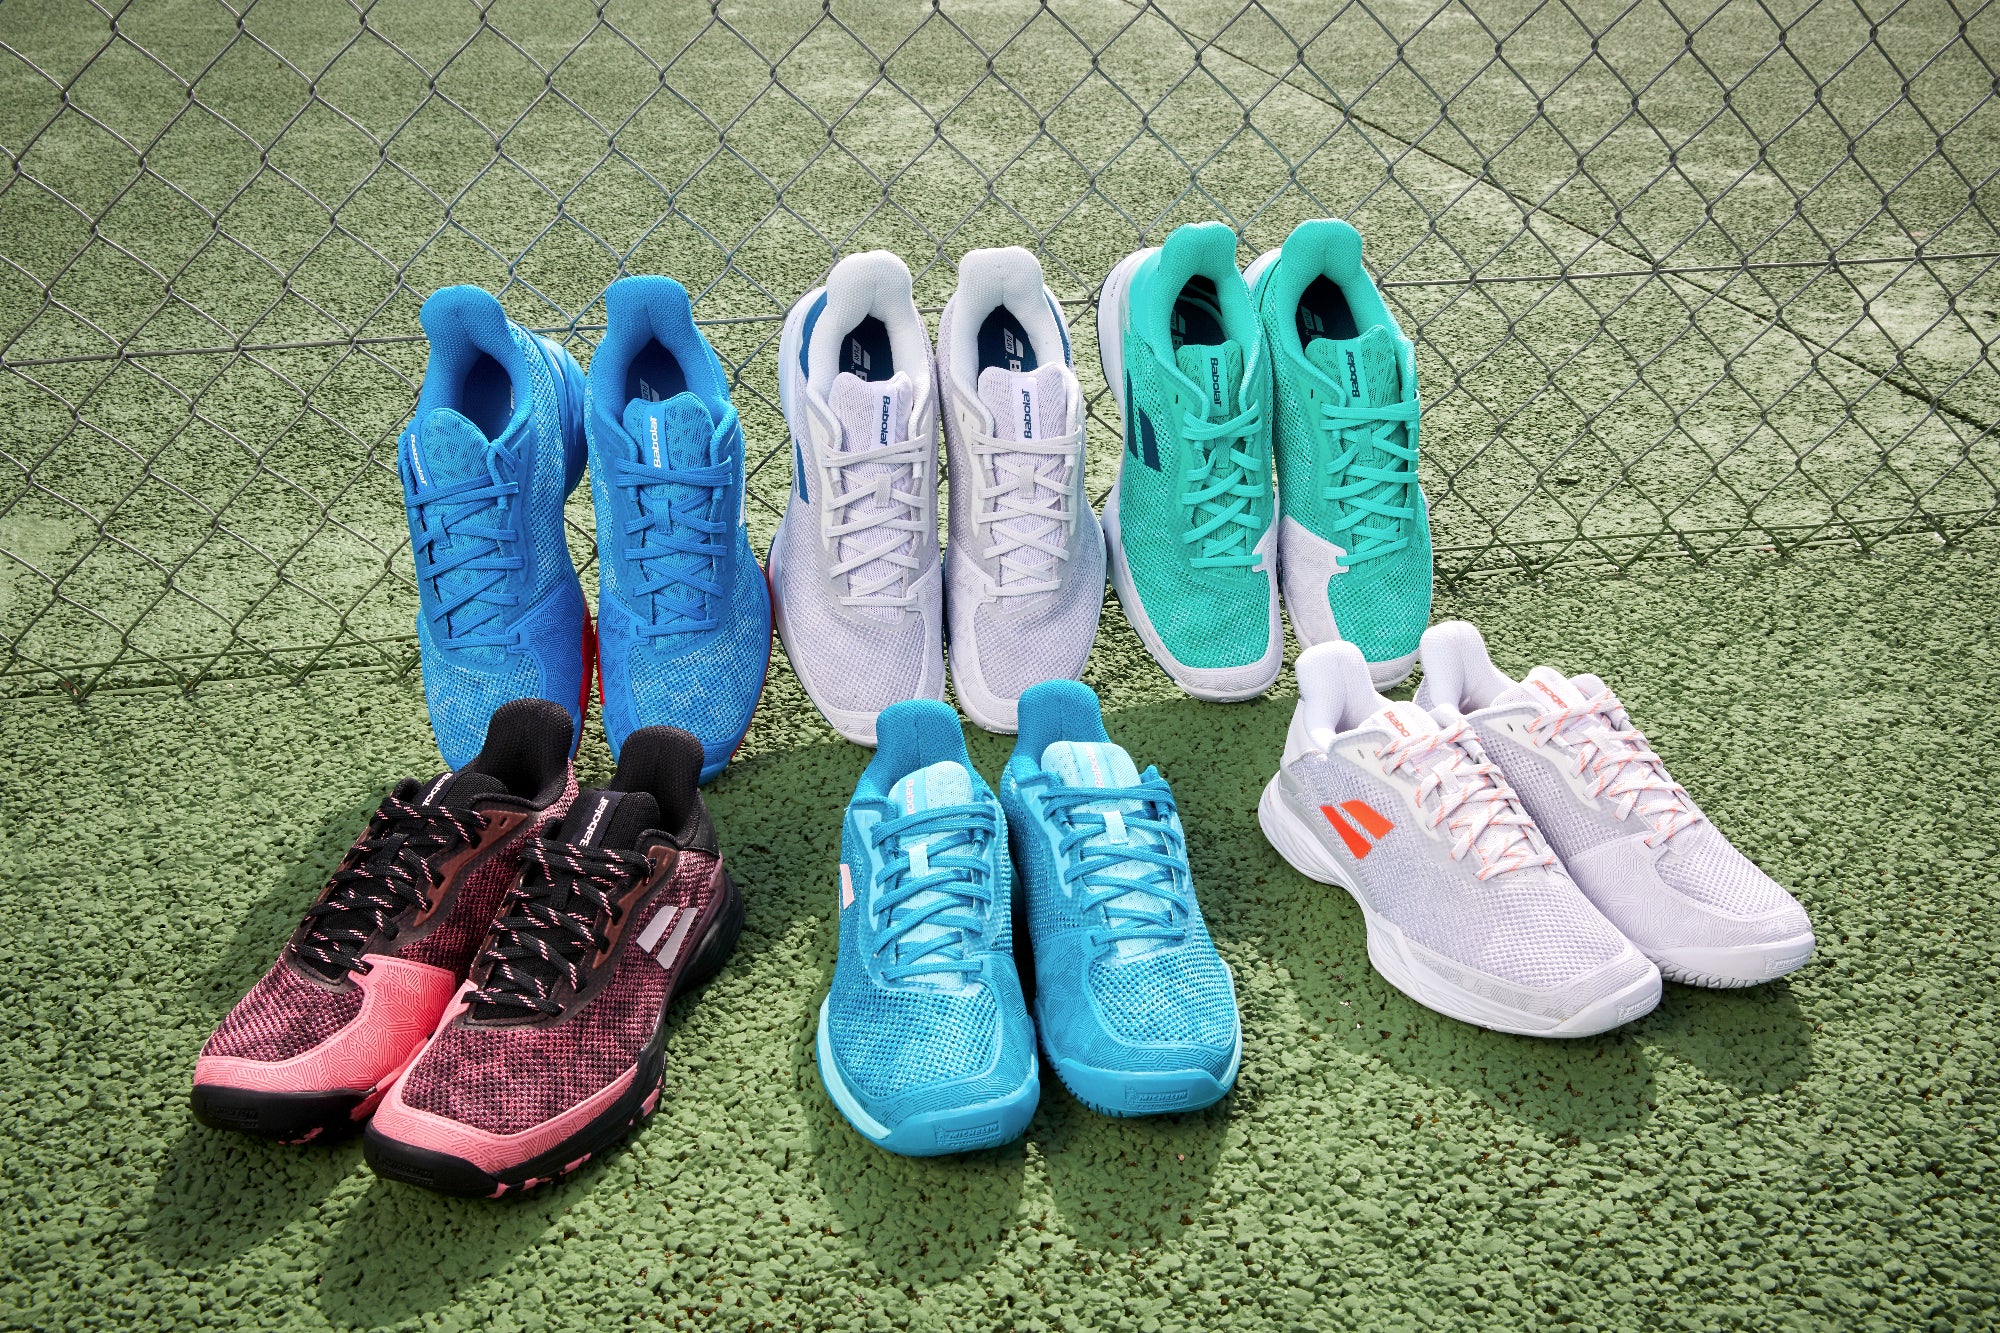 Babolat tennis shoes